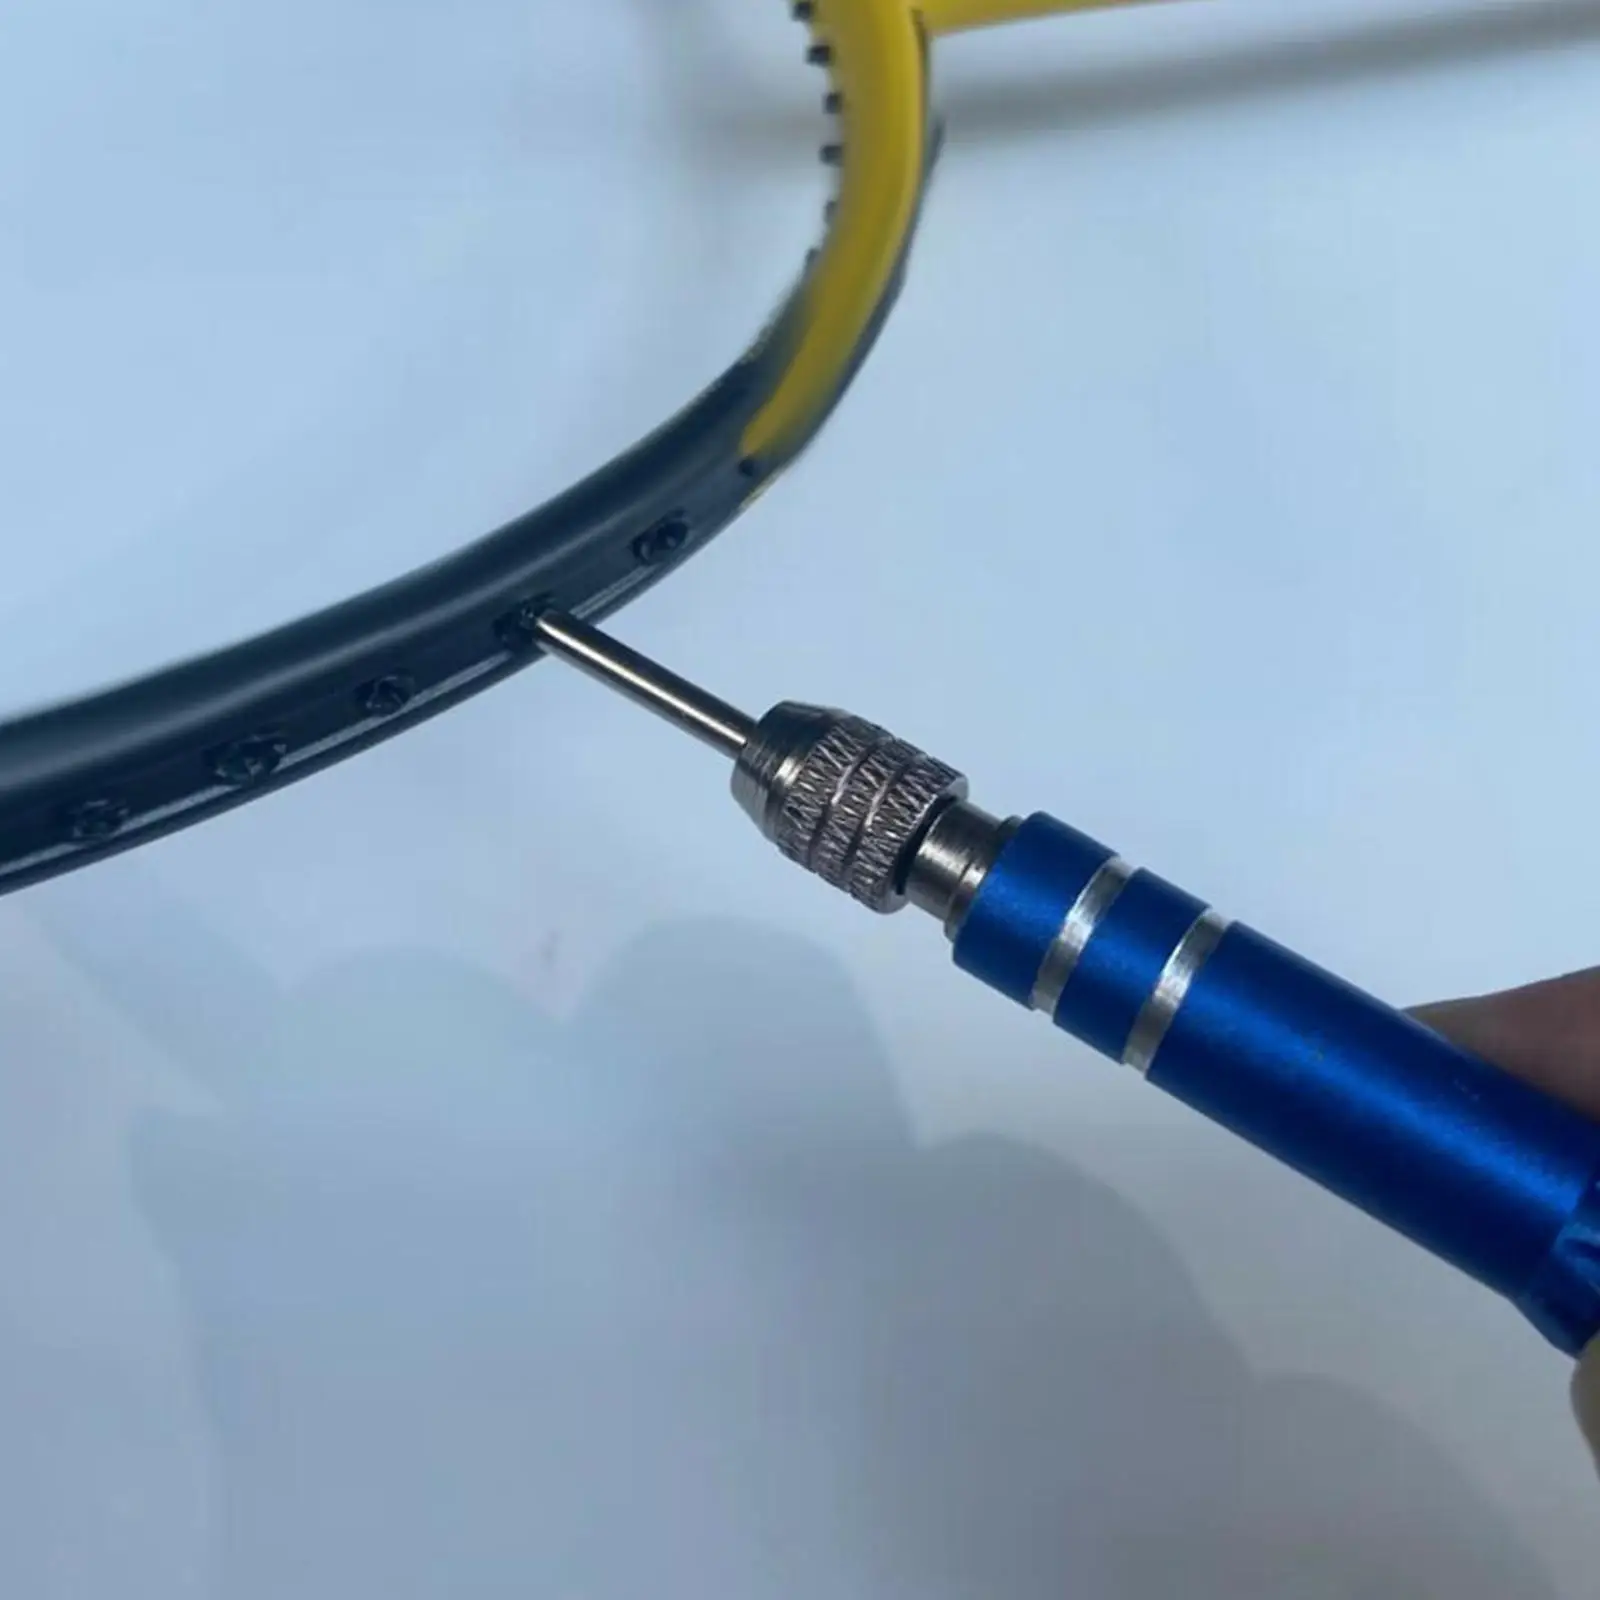 Badminton Racket Grommet Remover Grommets Replace Tool 14cm Badminton Racket Tool Racket String Tool for Tennis Repair Accessory